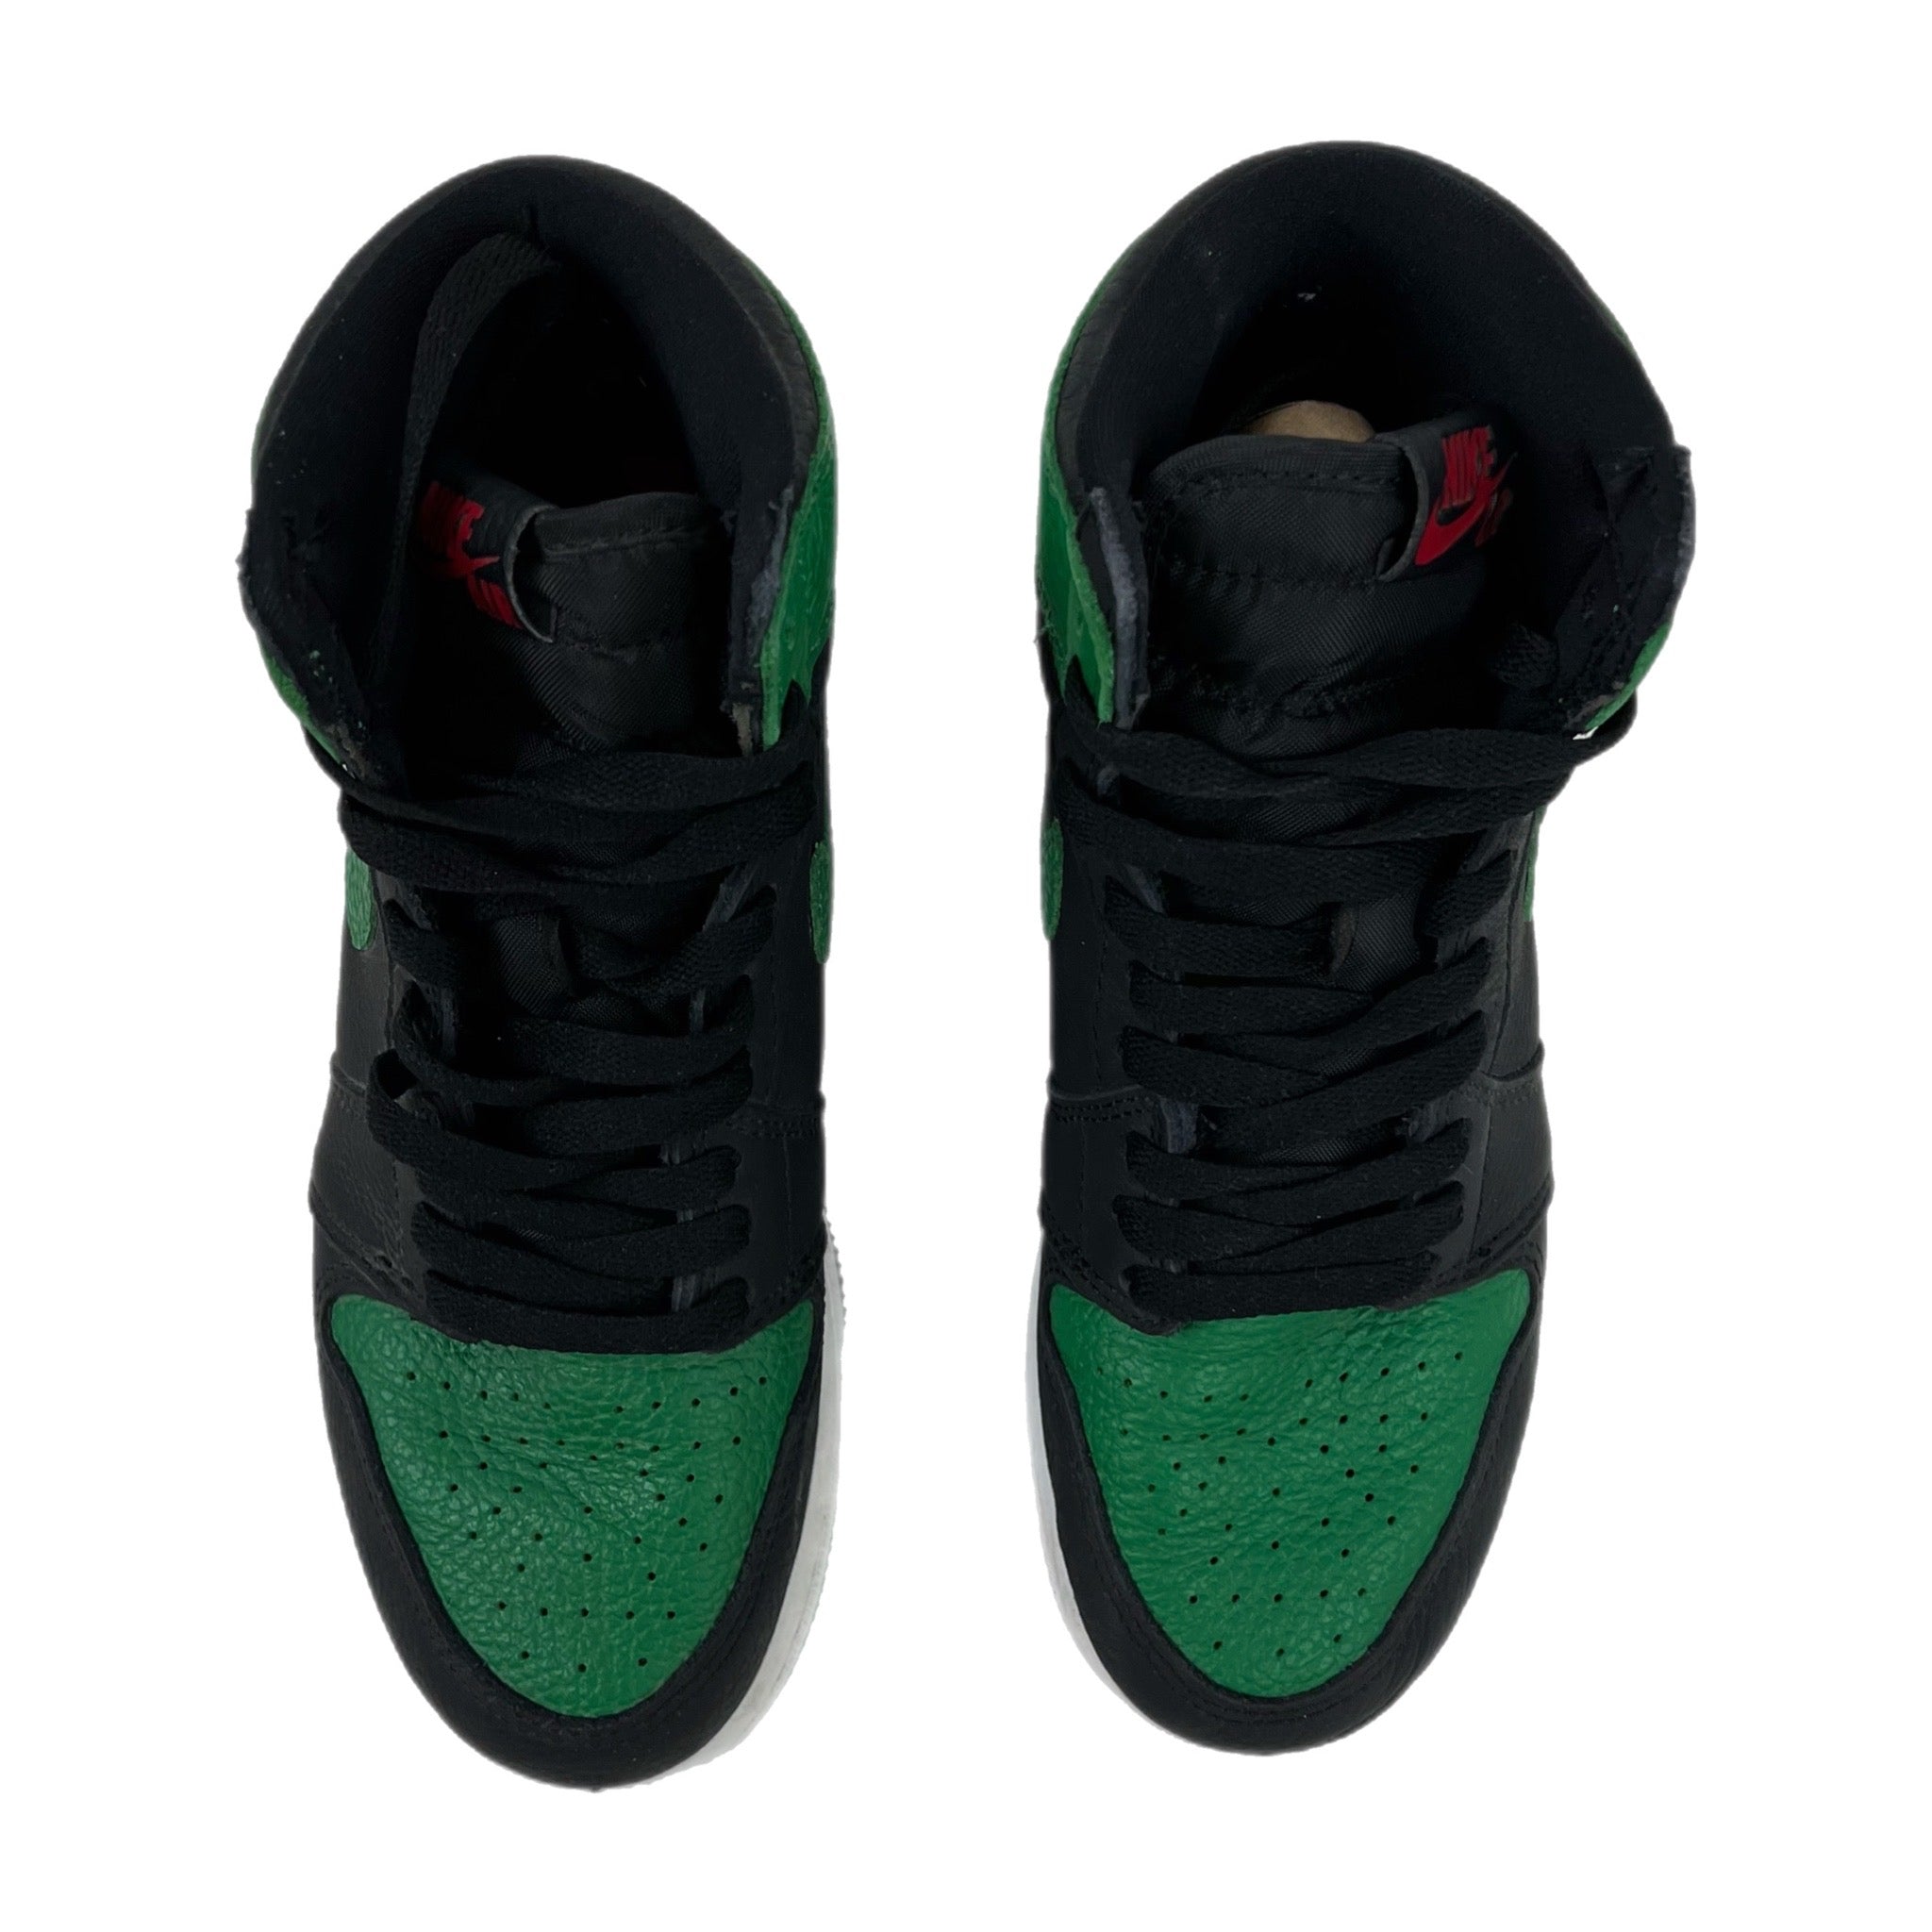 Jordan 1 Pine Green/Black (Used)